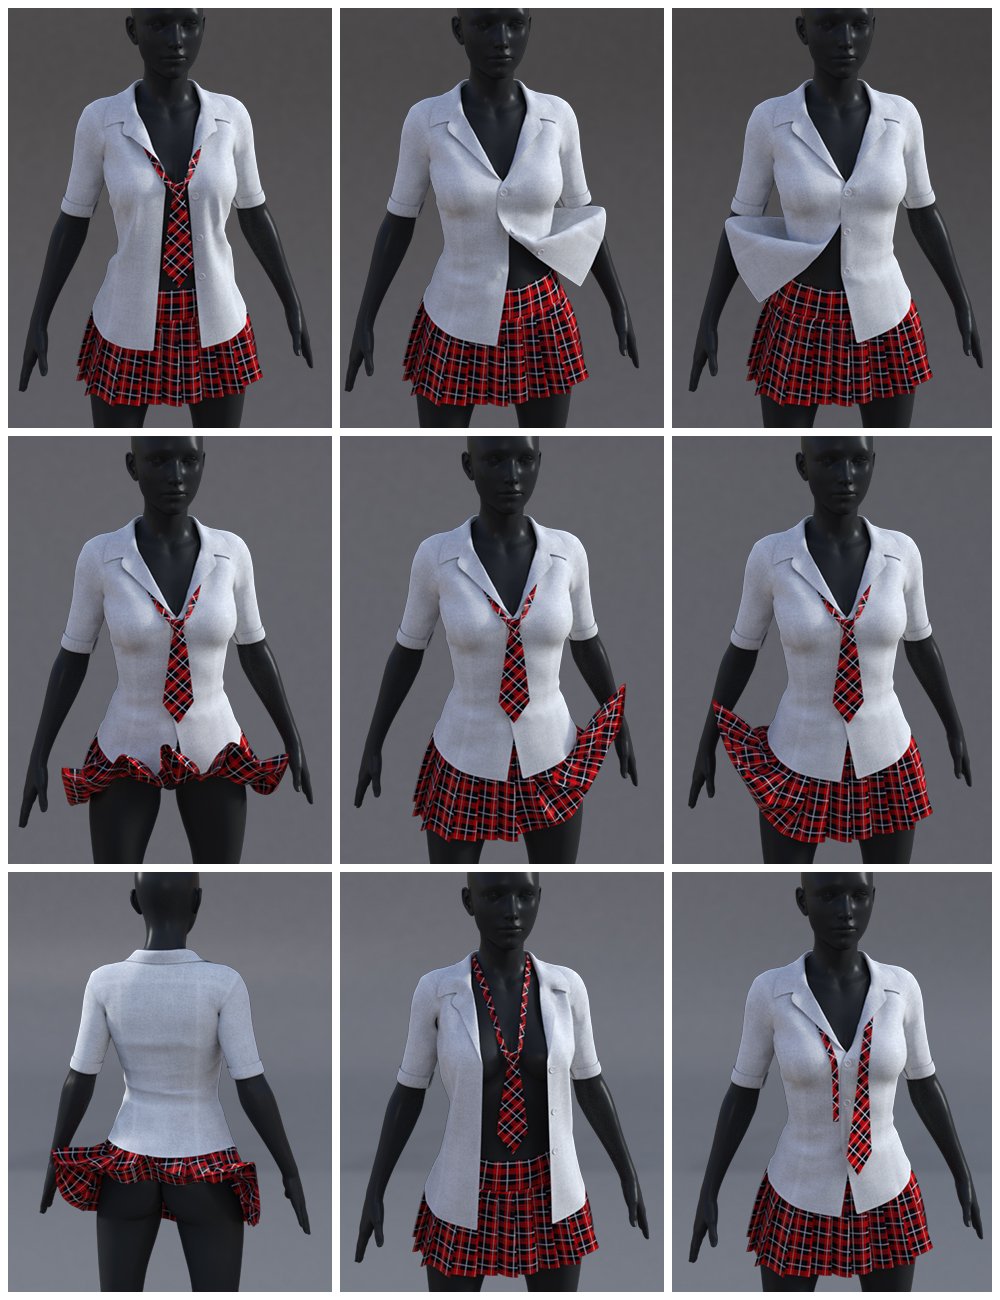 Flirty School Uniform for Genesis 8 Female(s) by: Charlie, 3D Models by Daz 3D